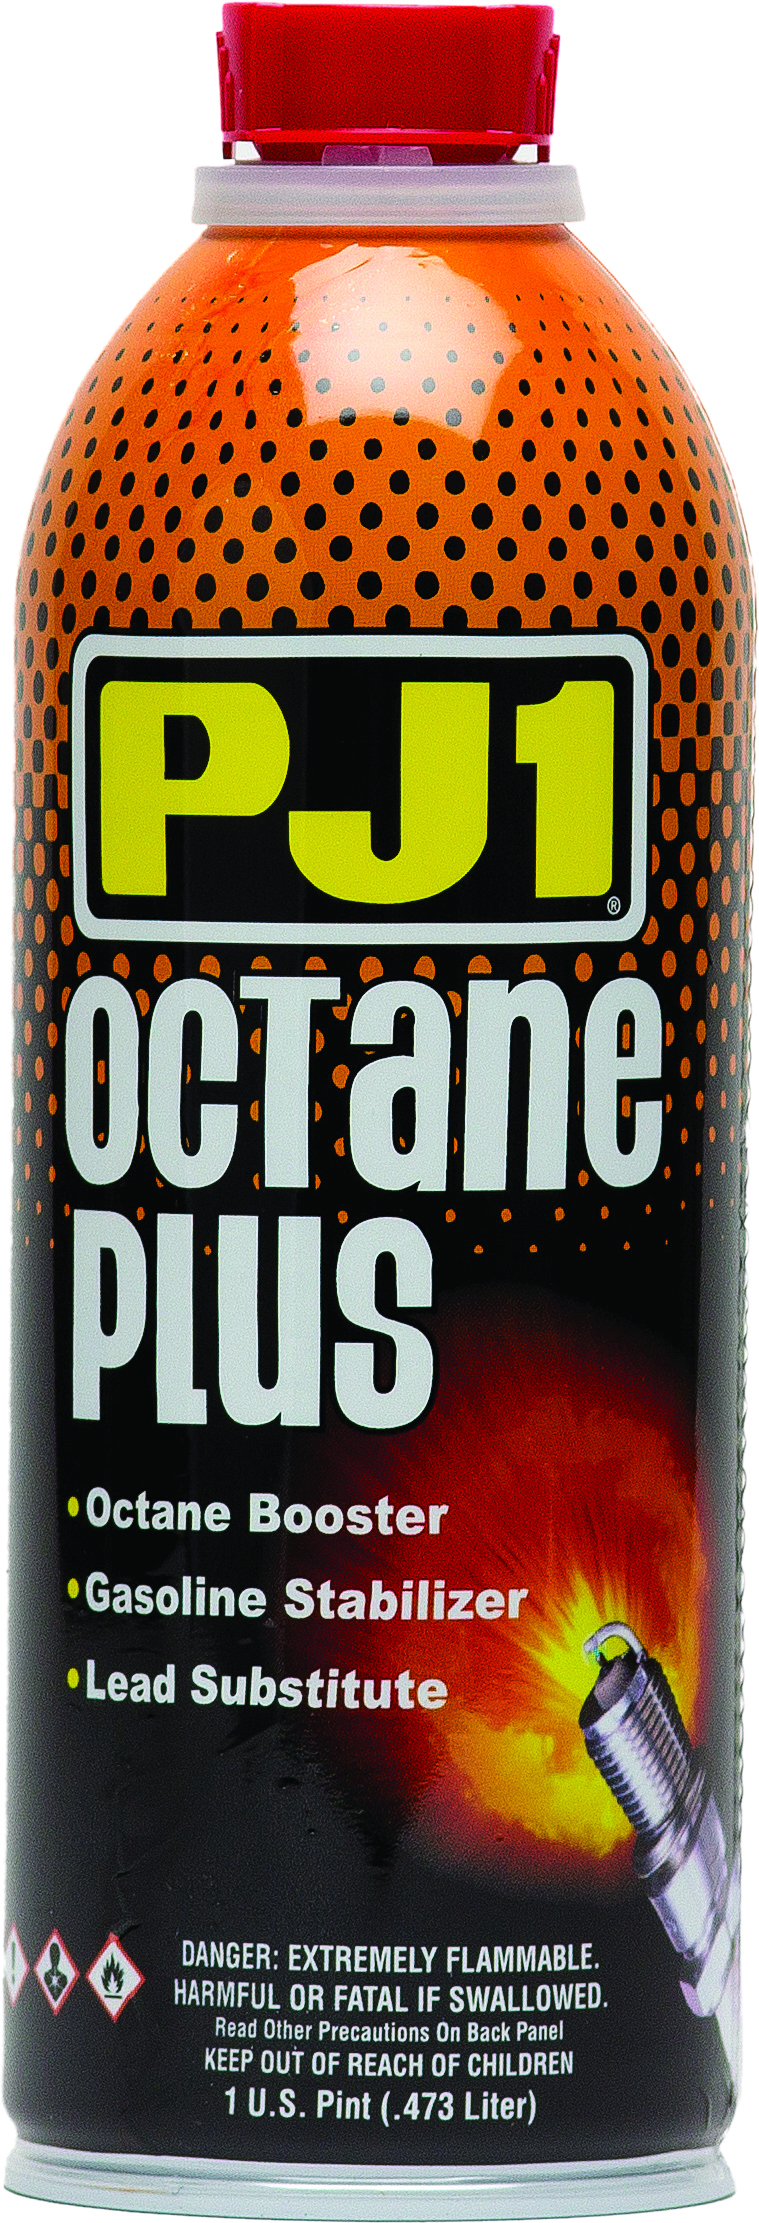 Pj1 - Octane Plus 1/2-liter - 13-16